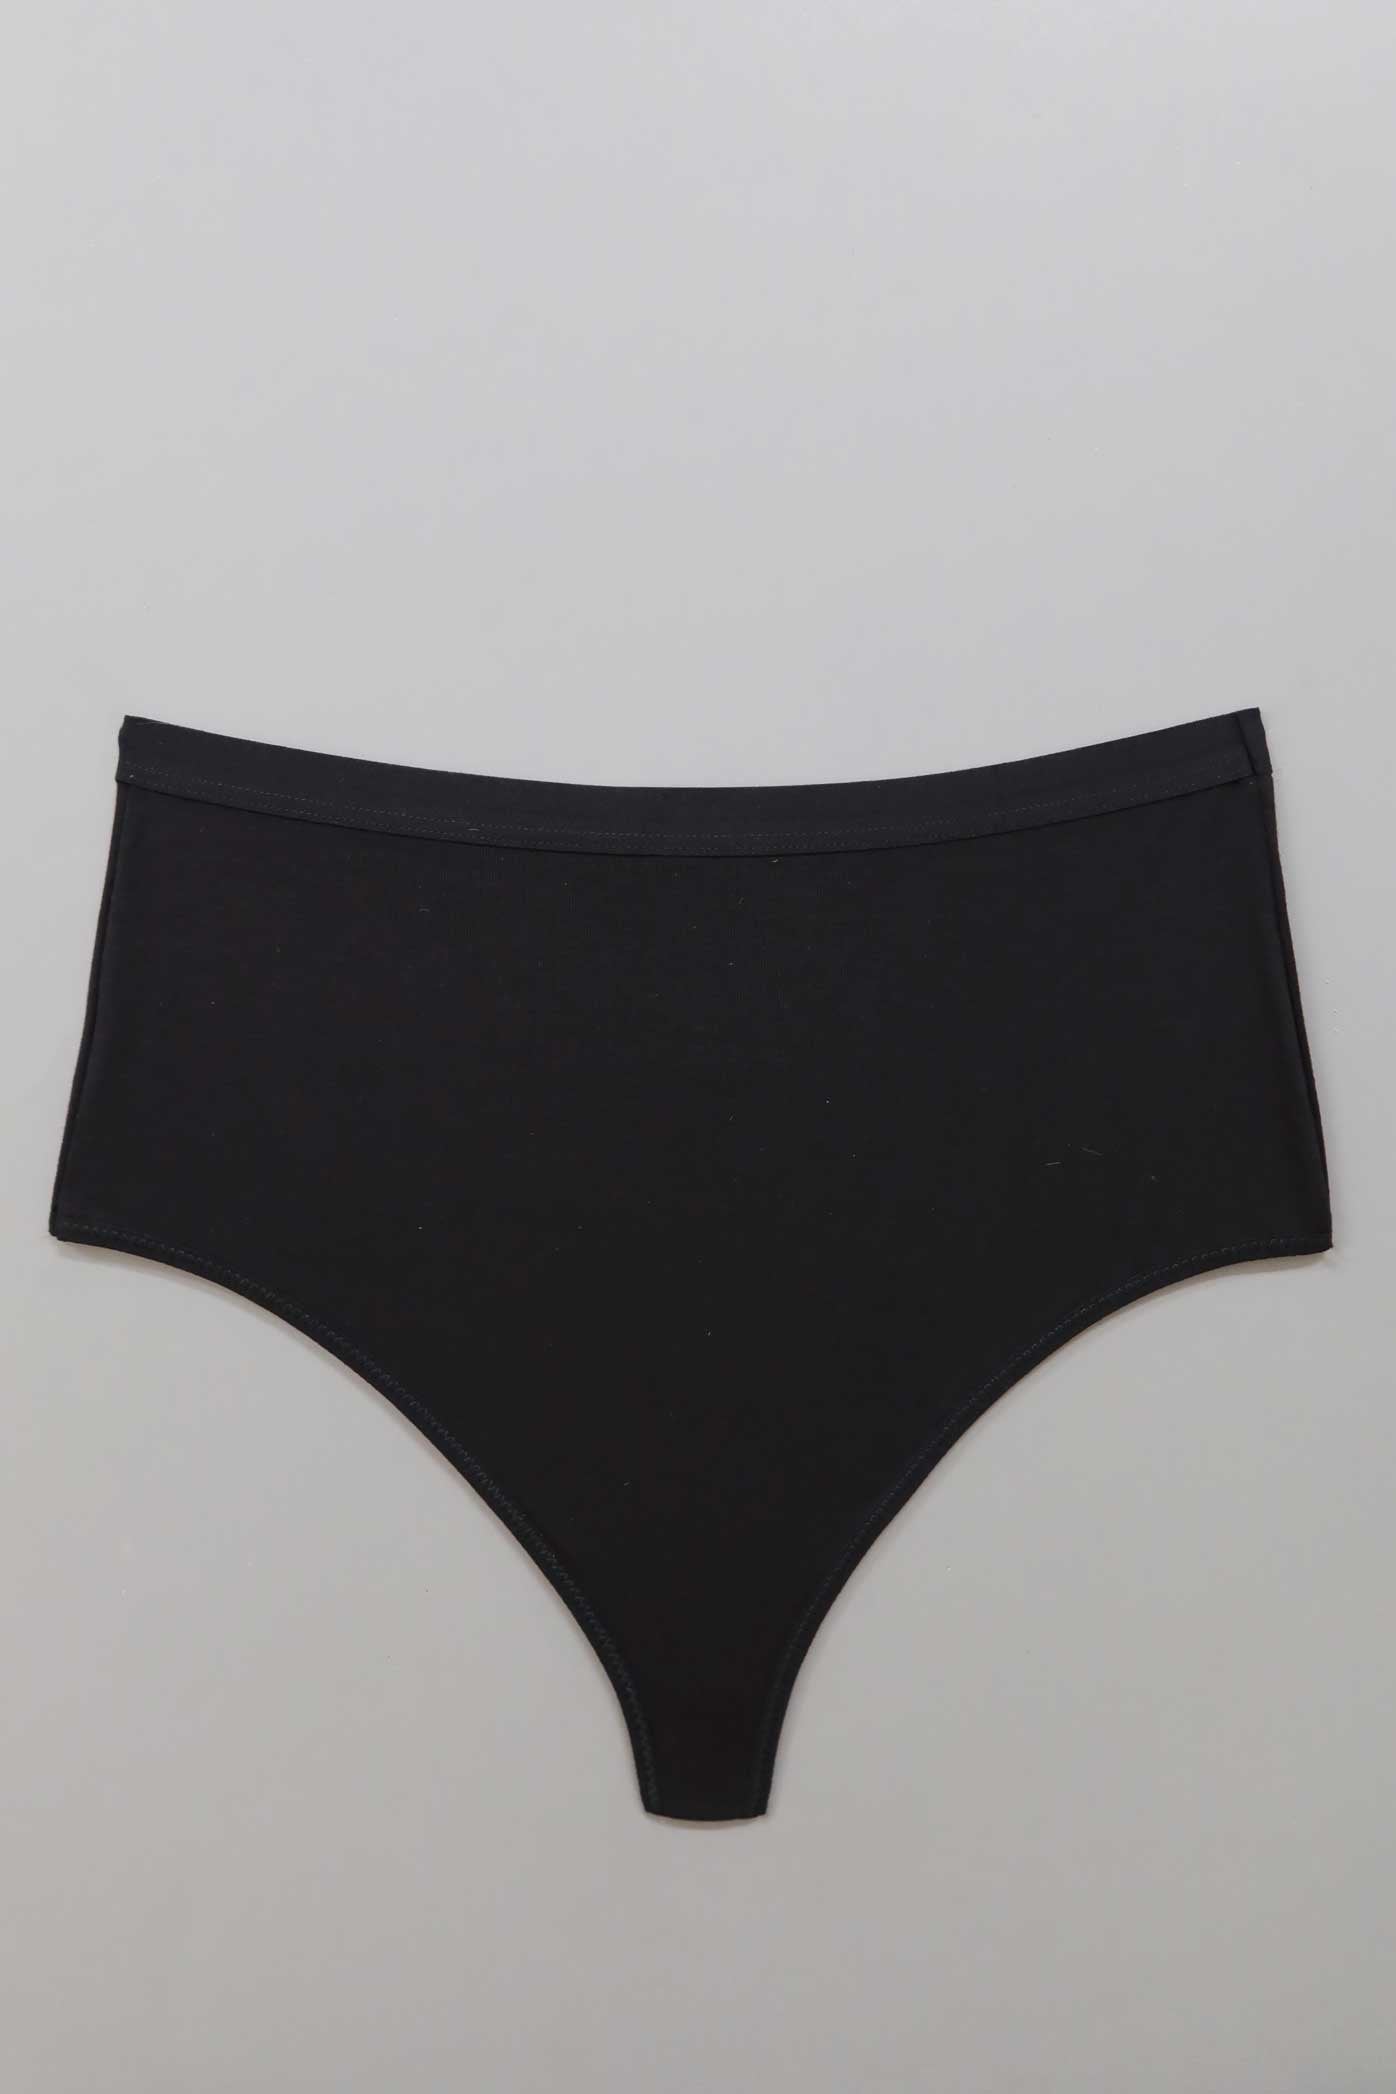 Black Eva Thong Panty Sexy Erotic Lingerie for Women High Rise